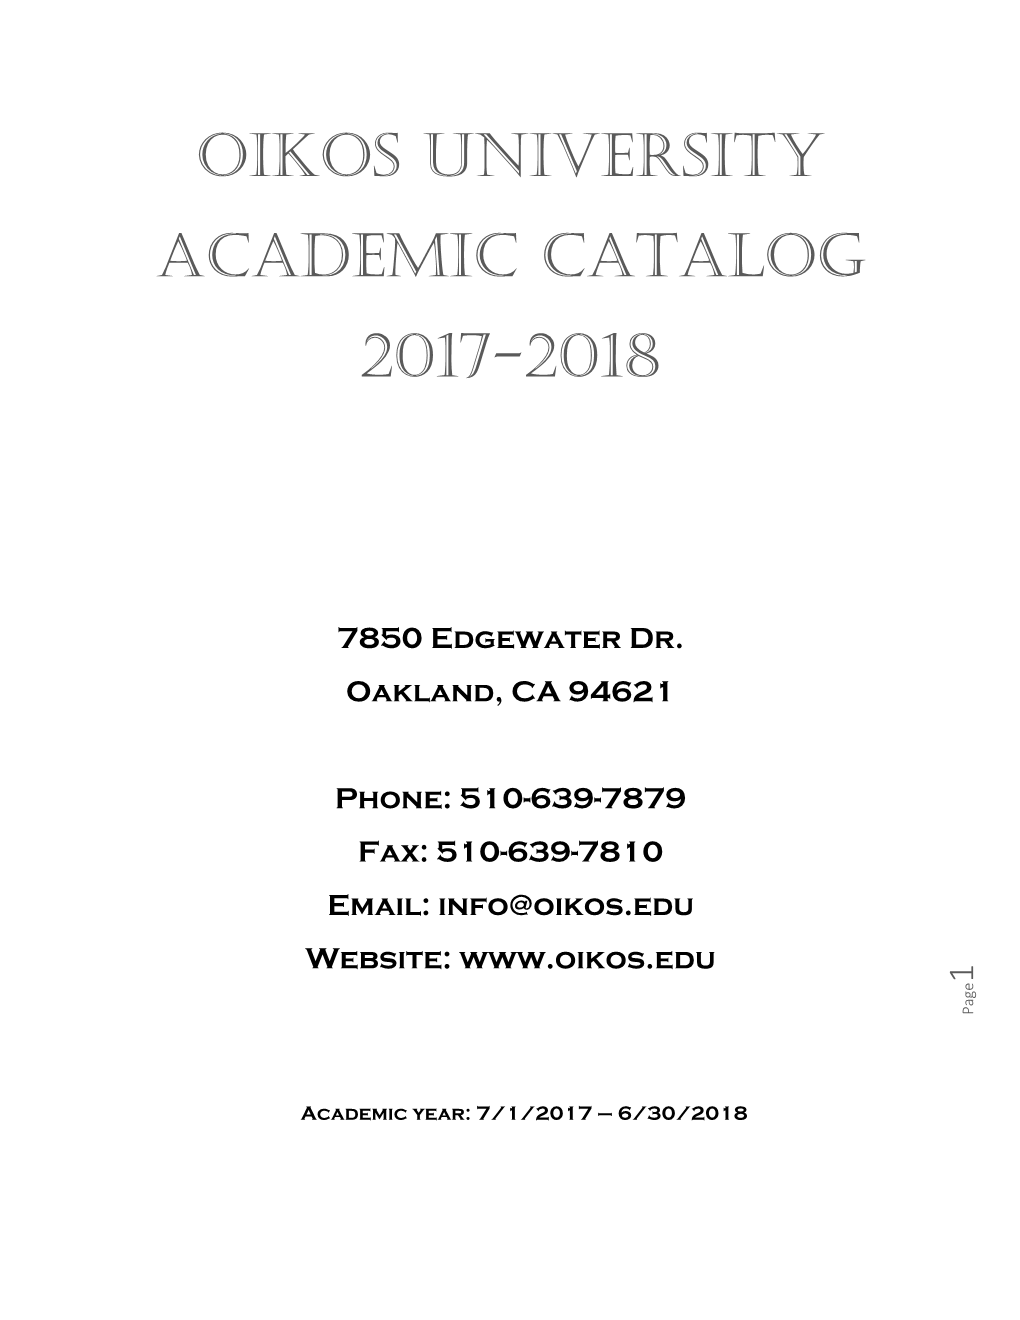 Oikos University Academic Catalog 2017-2018